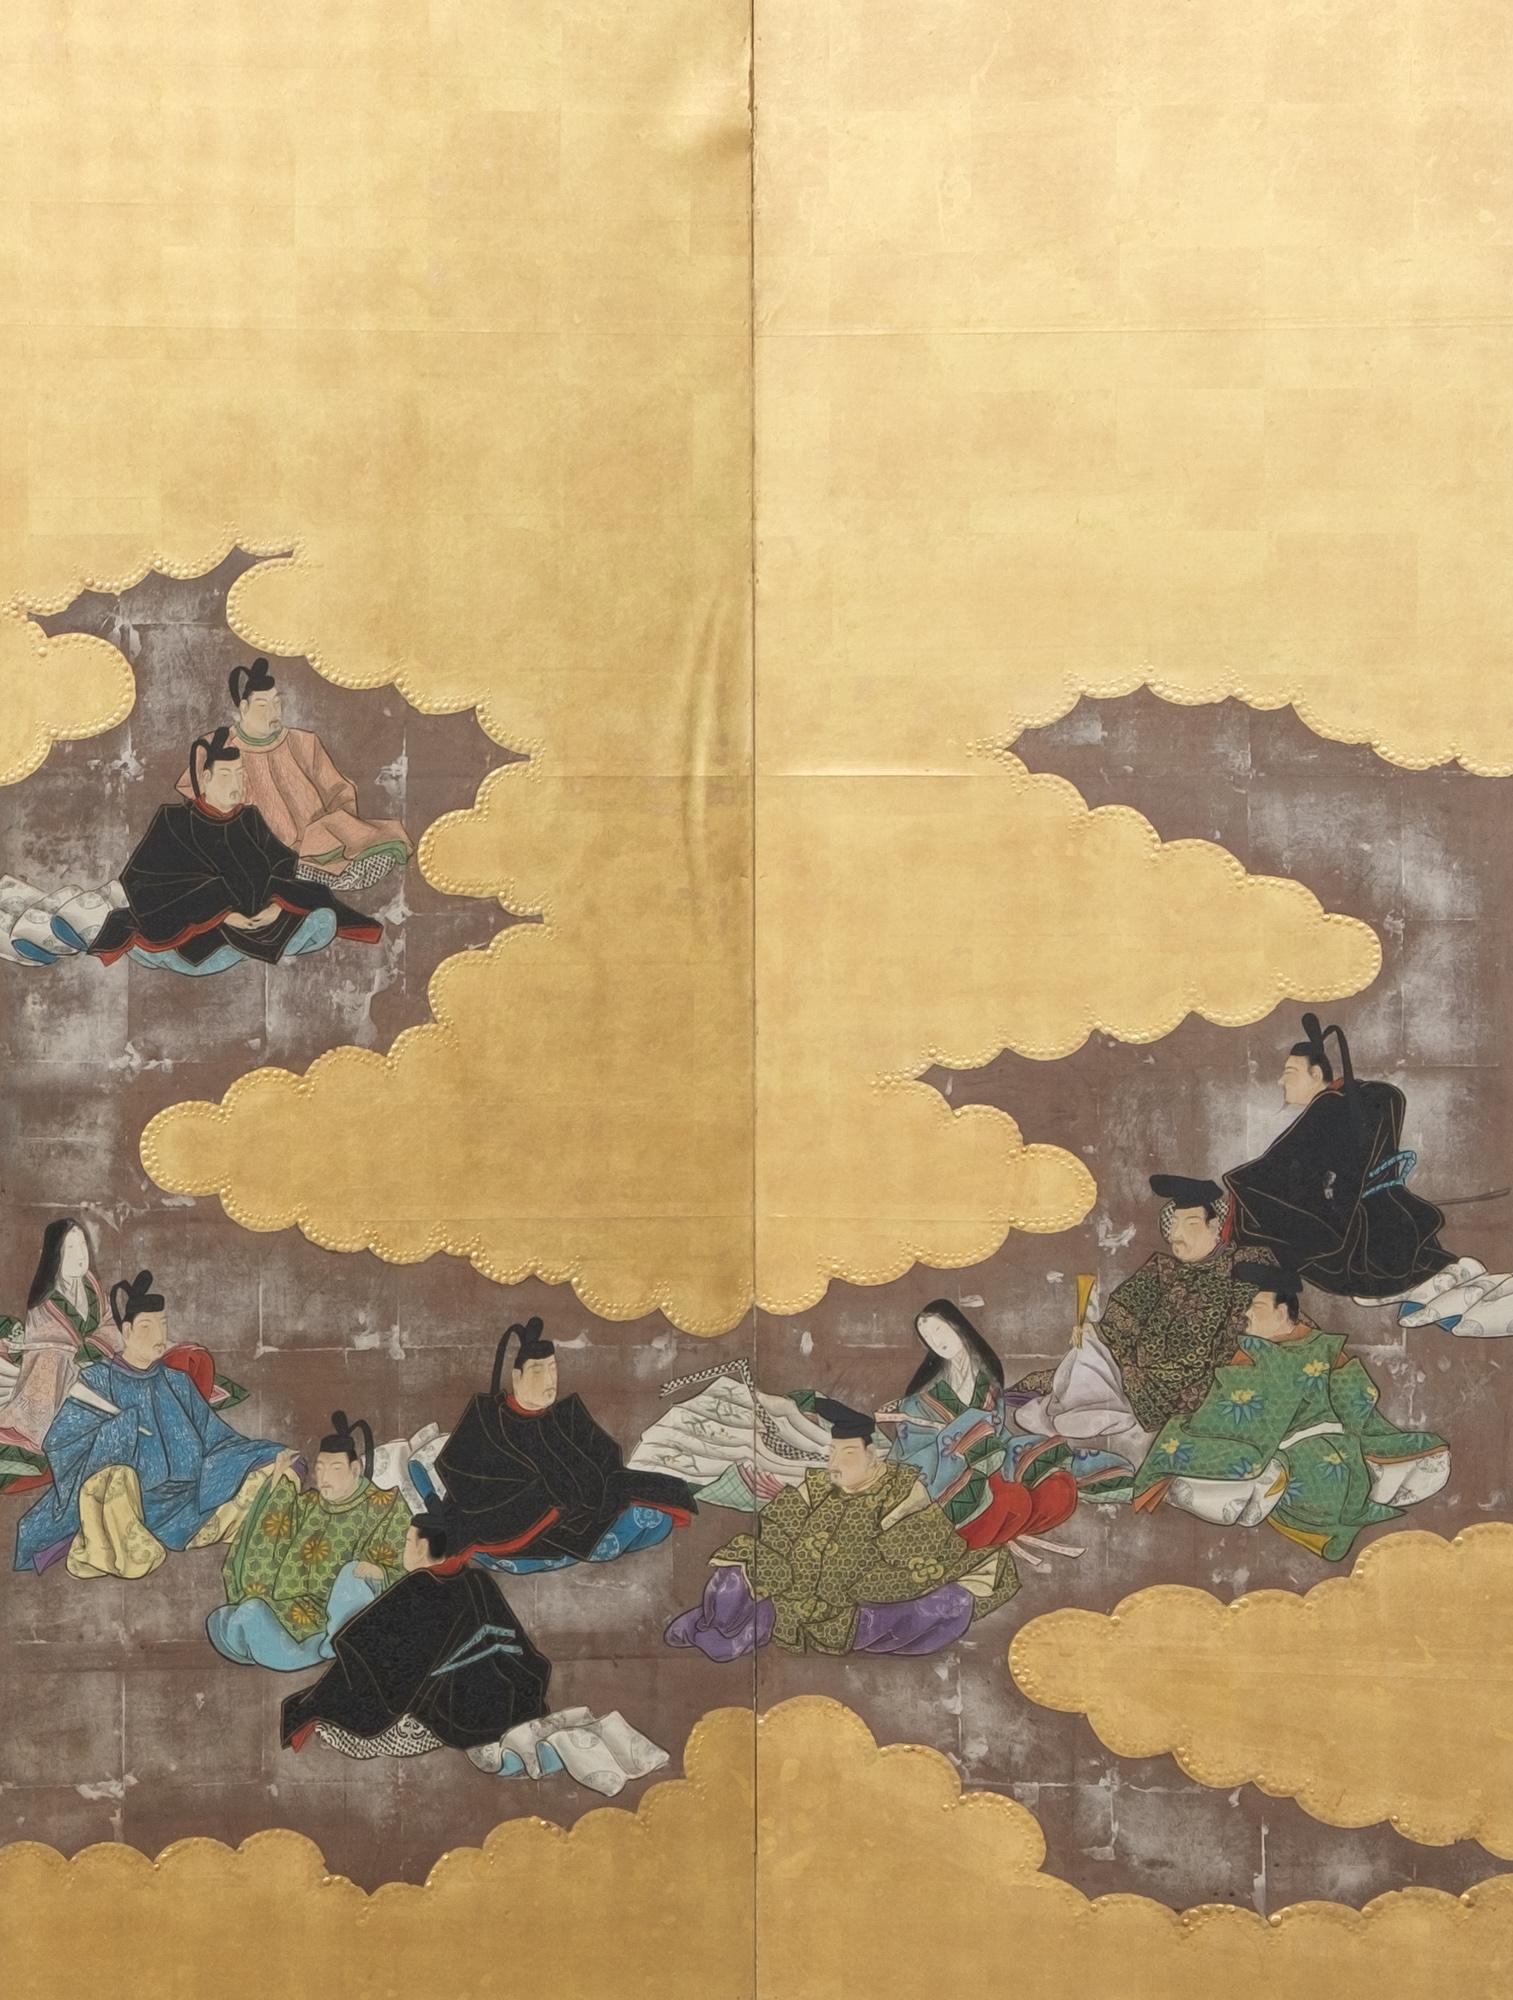 Pair of Japanese folding screens (byôbu) of poets from ‘Hyakunin isshu’ 百人一首 10